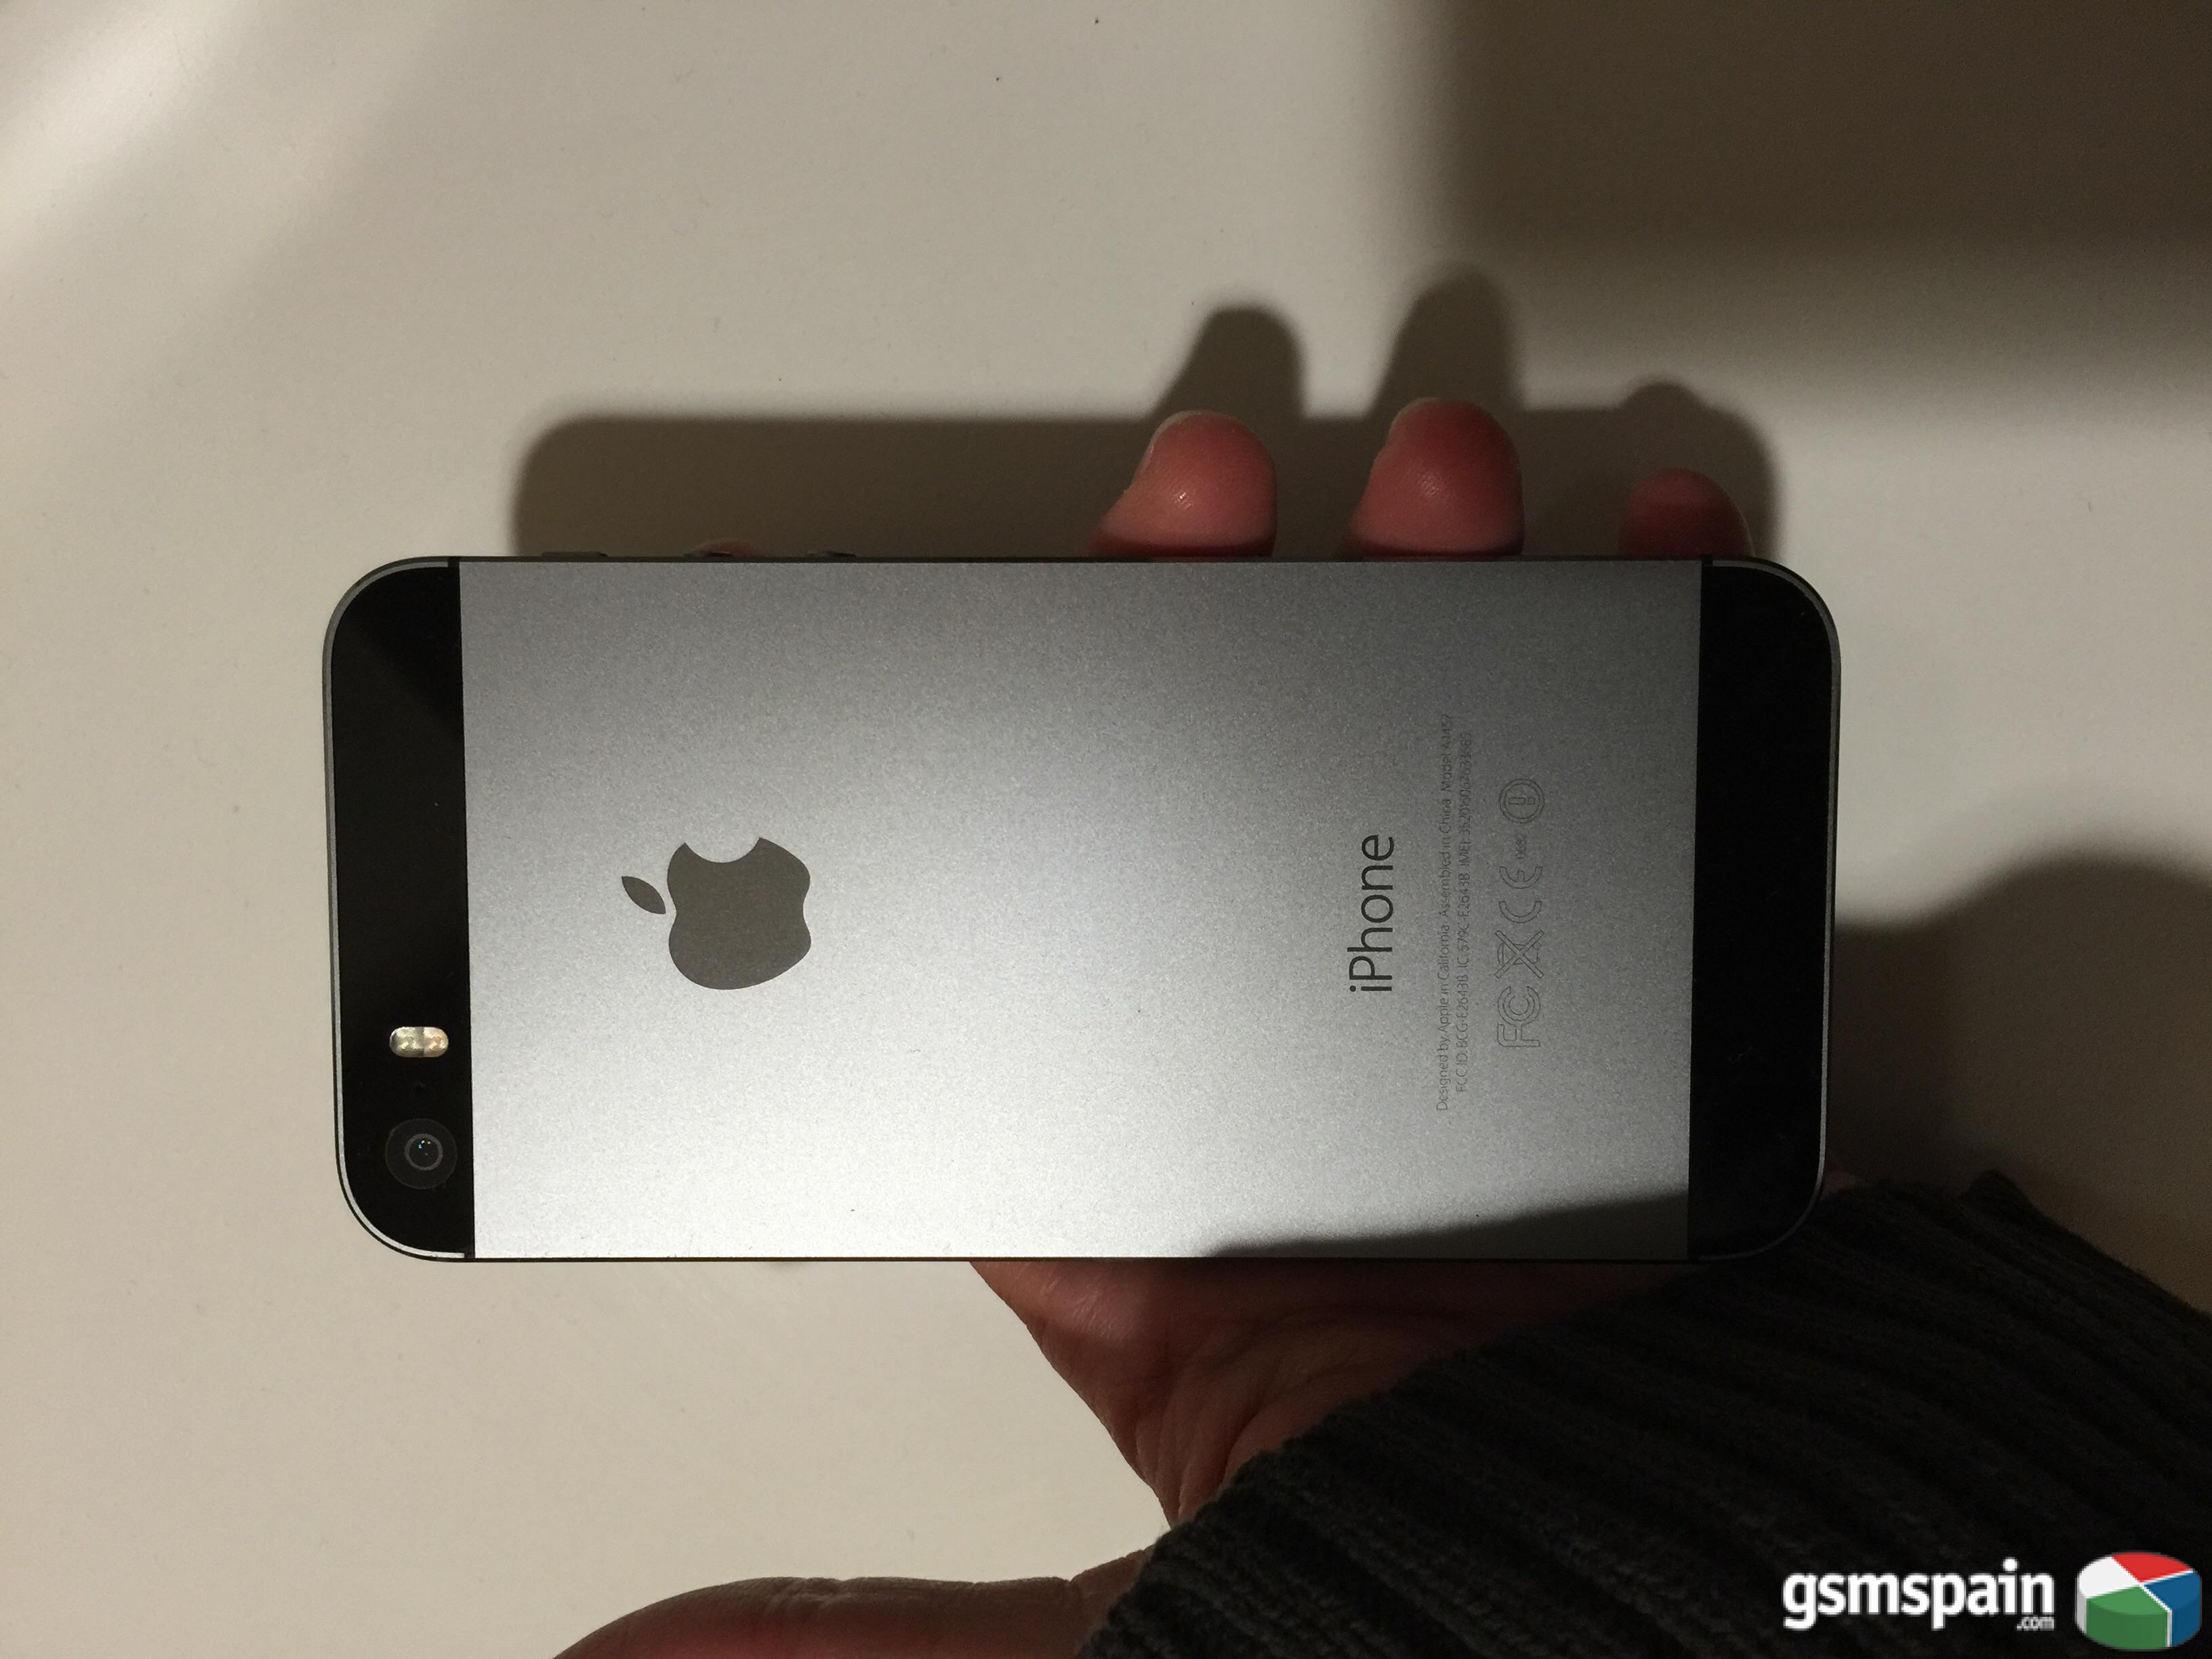 [VENDO] Iphone 5s 16gb grey, impecable 350